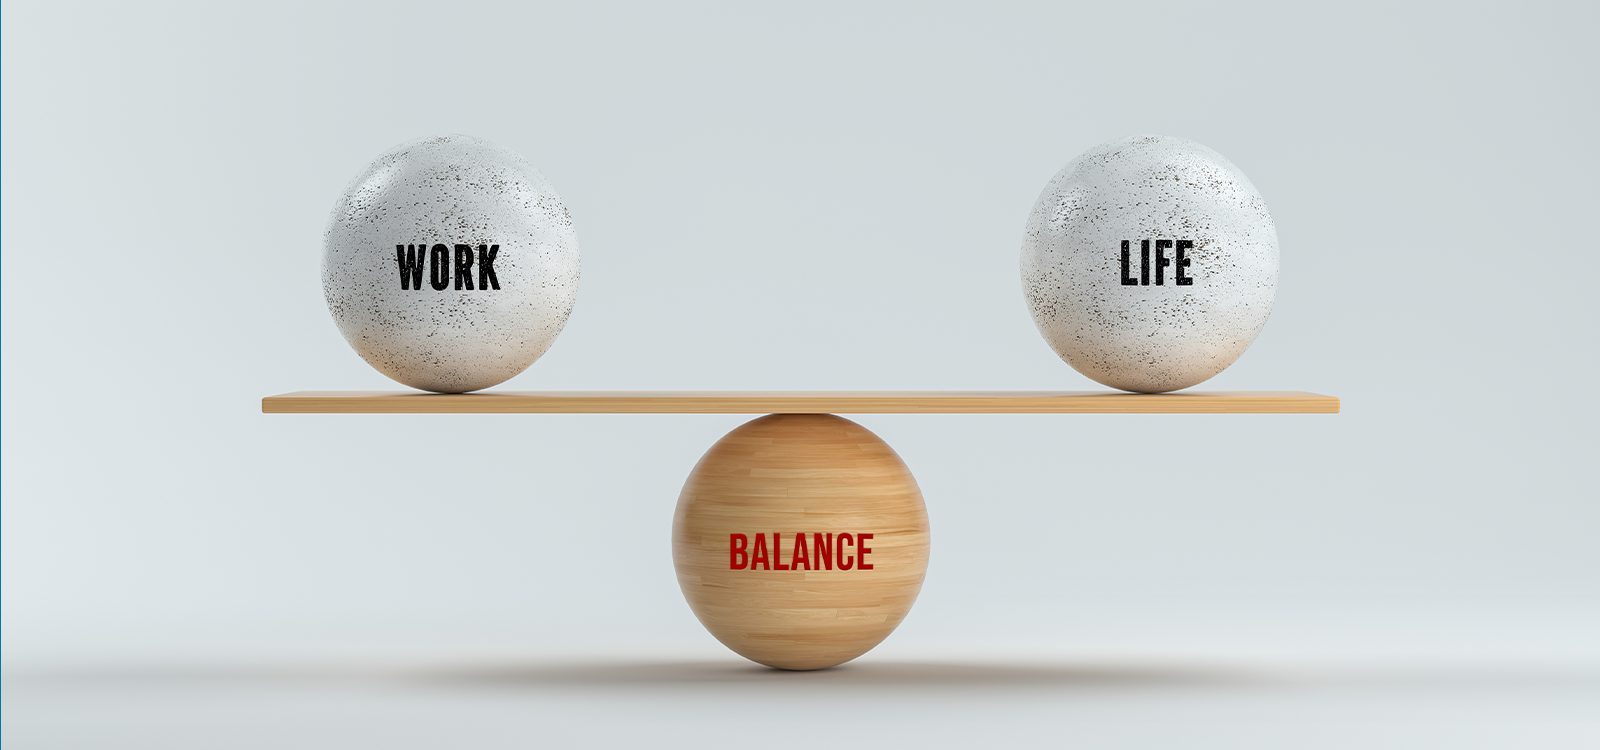 Tips to create a healthy work-life balance